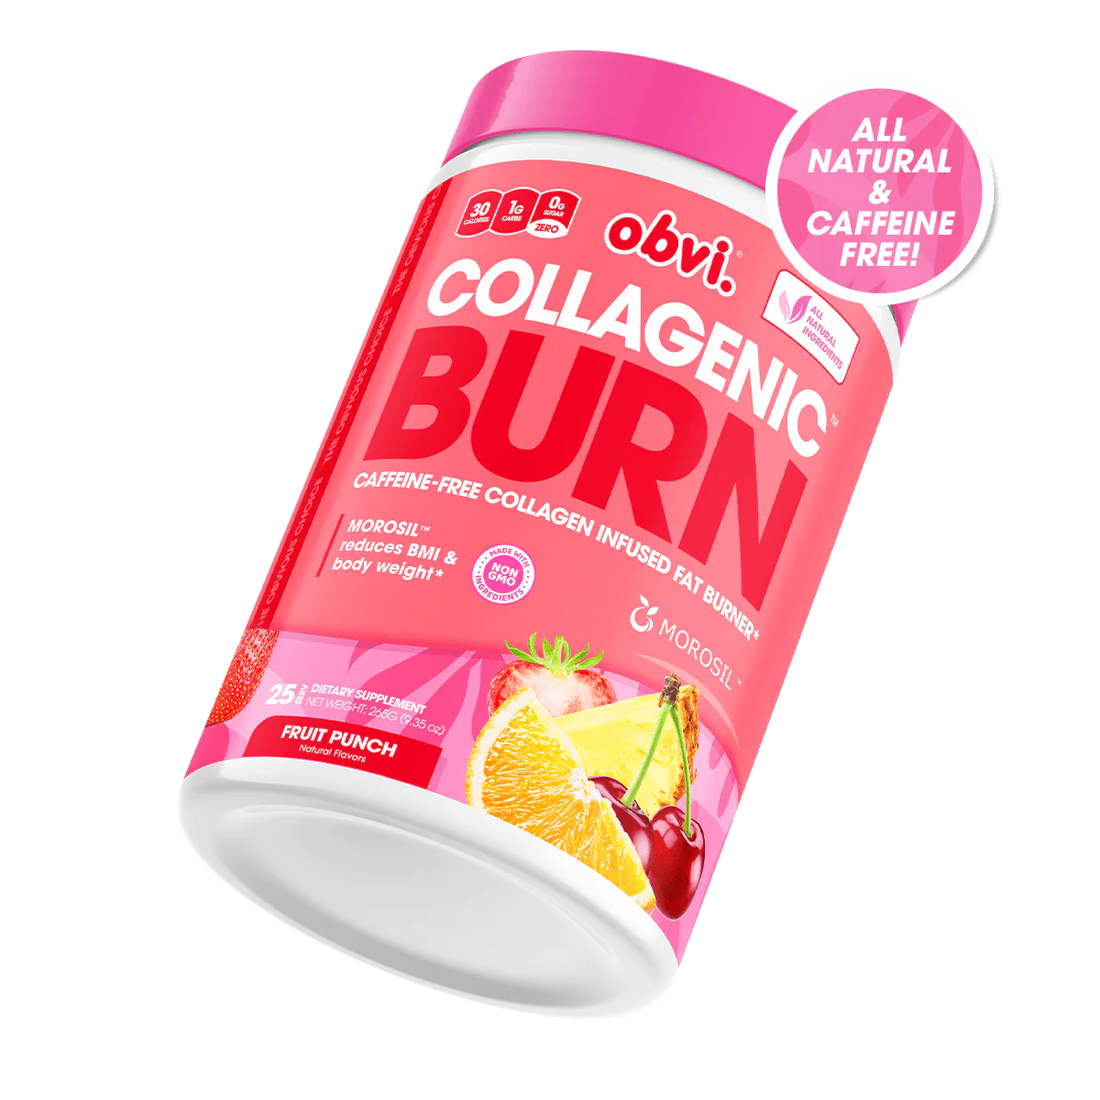 Collagenic Burn (Stim Free) - Fruit Punch